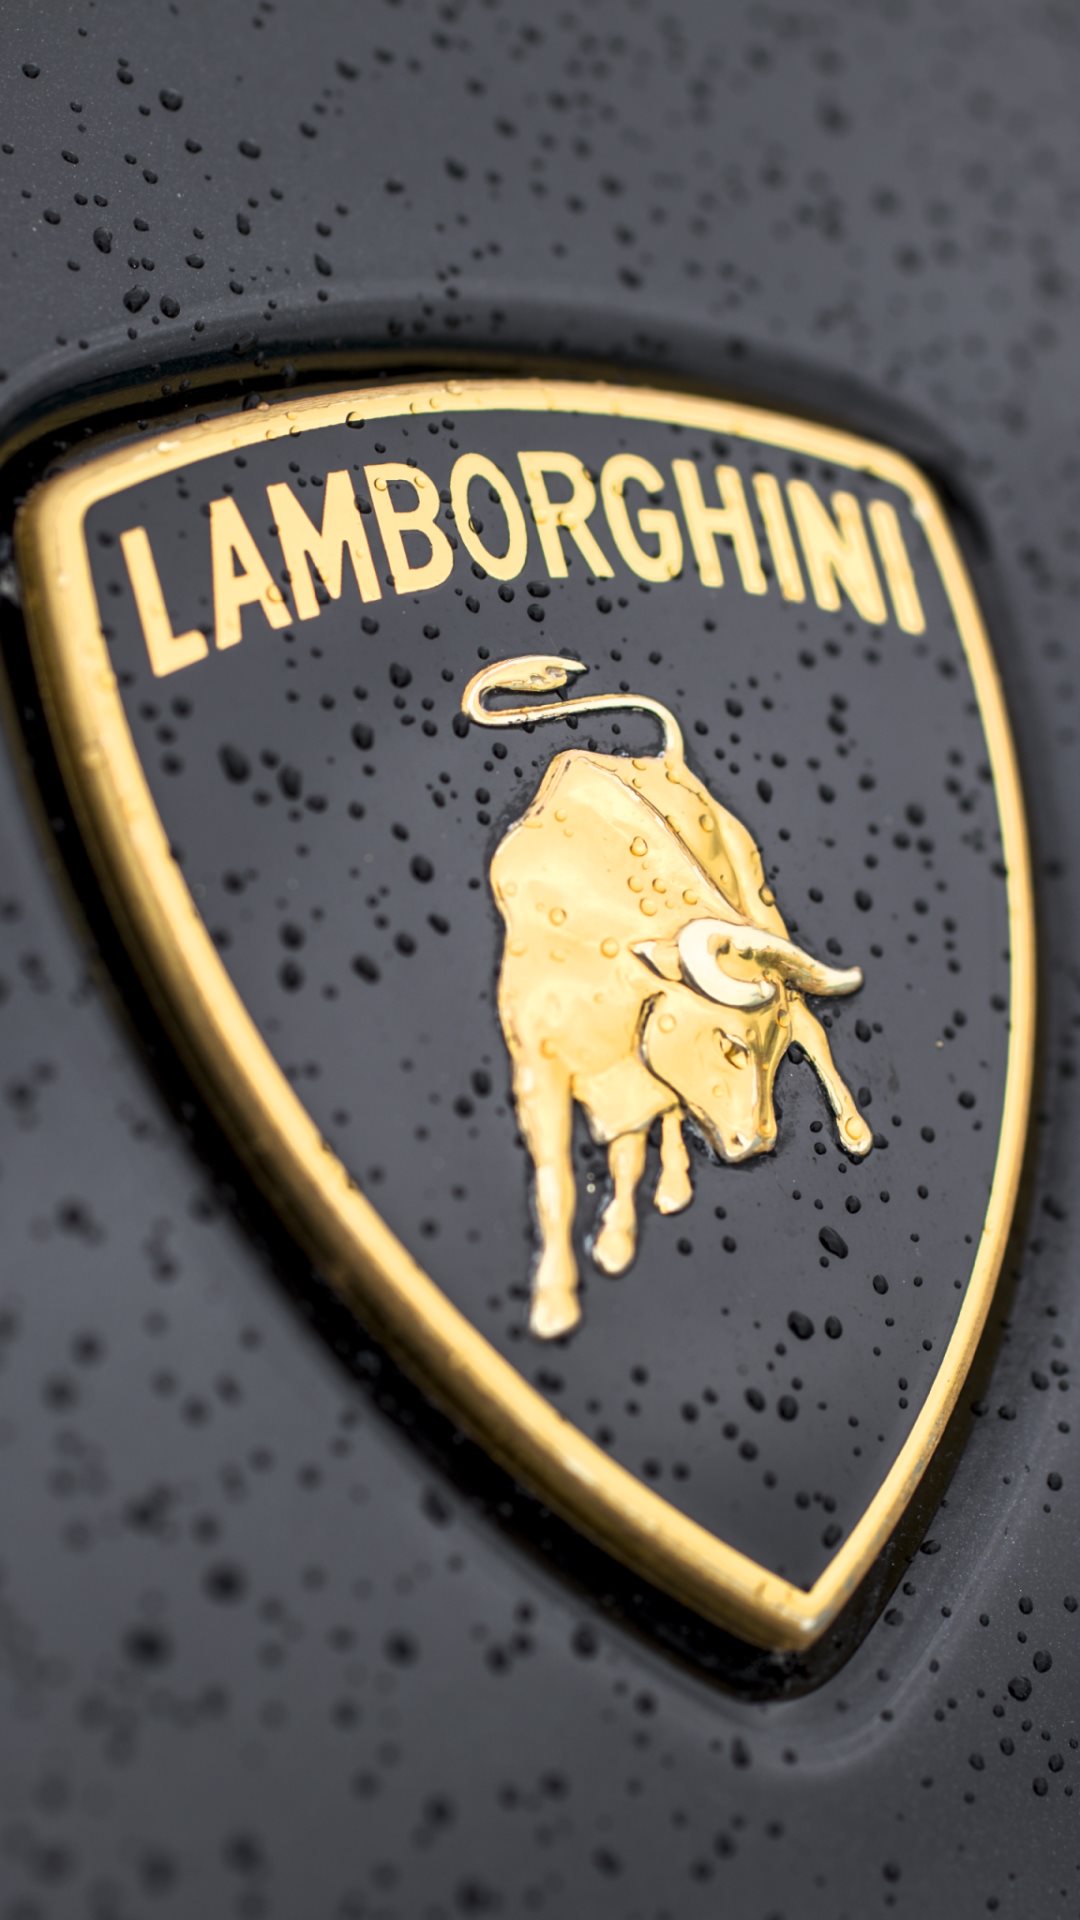 Lamborghini-Logo-Close-up-iPhone-6-Plus-HD-Wallpaper